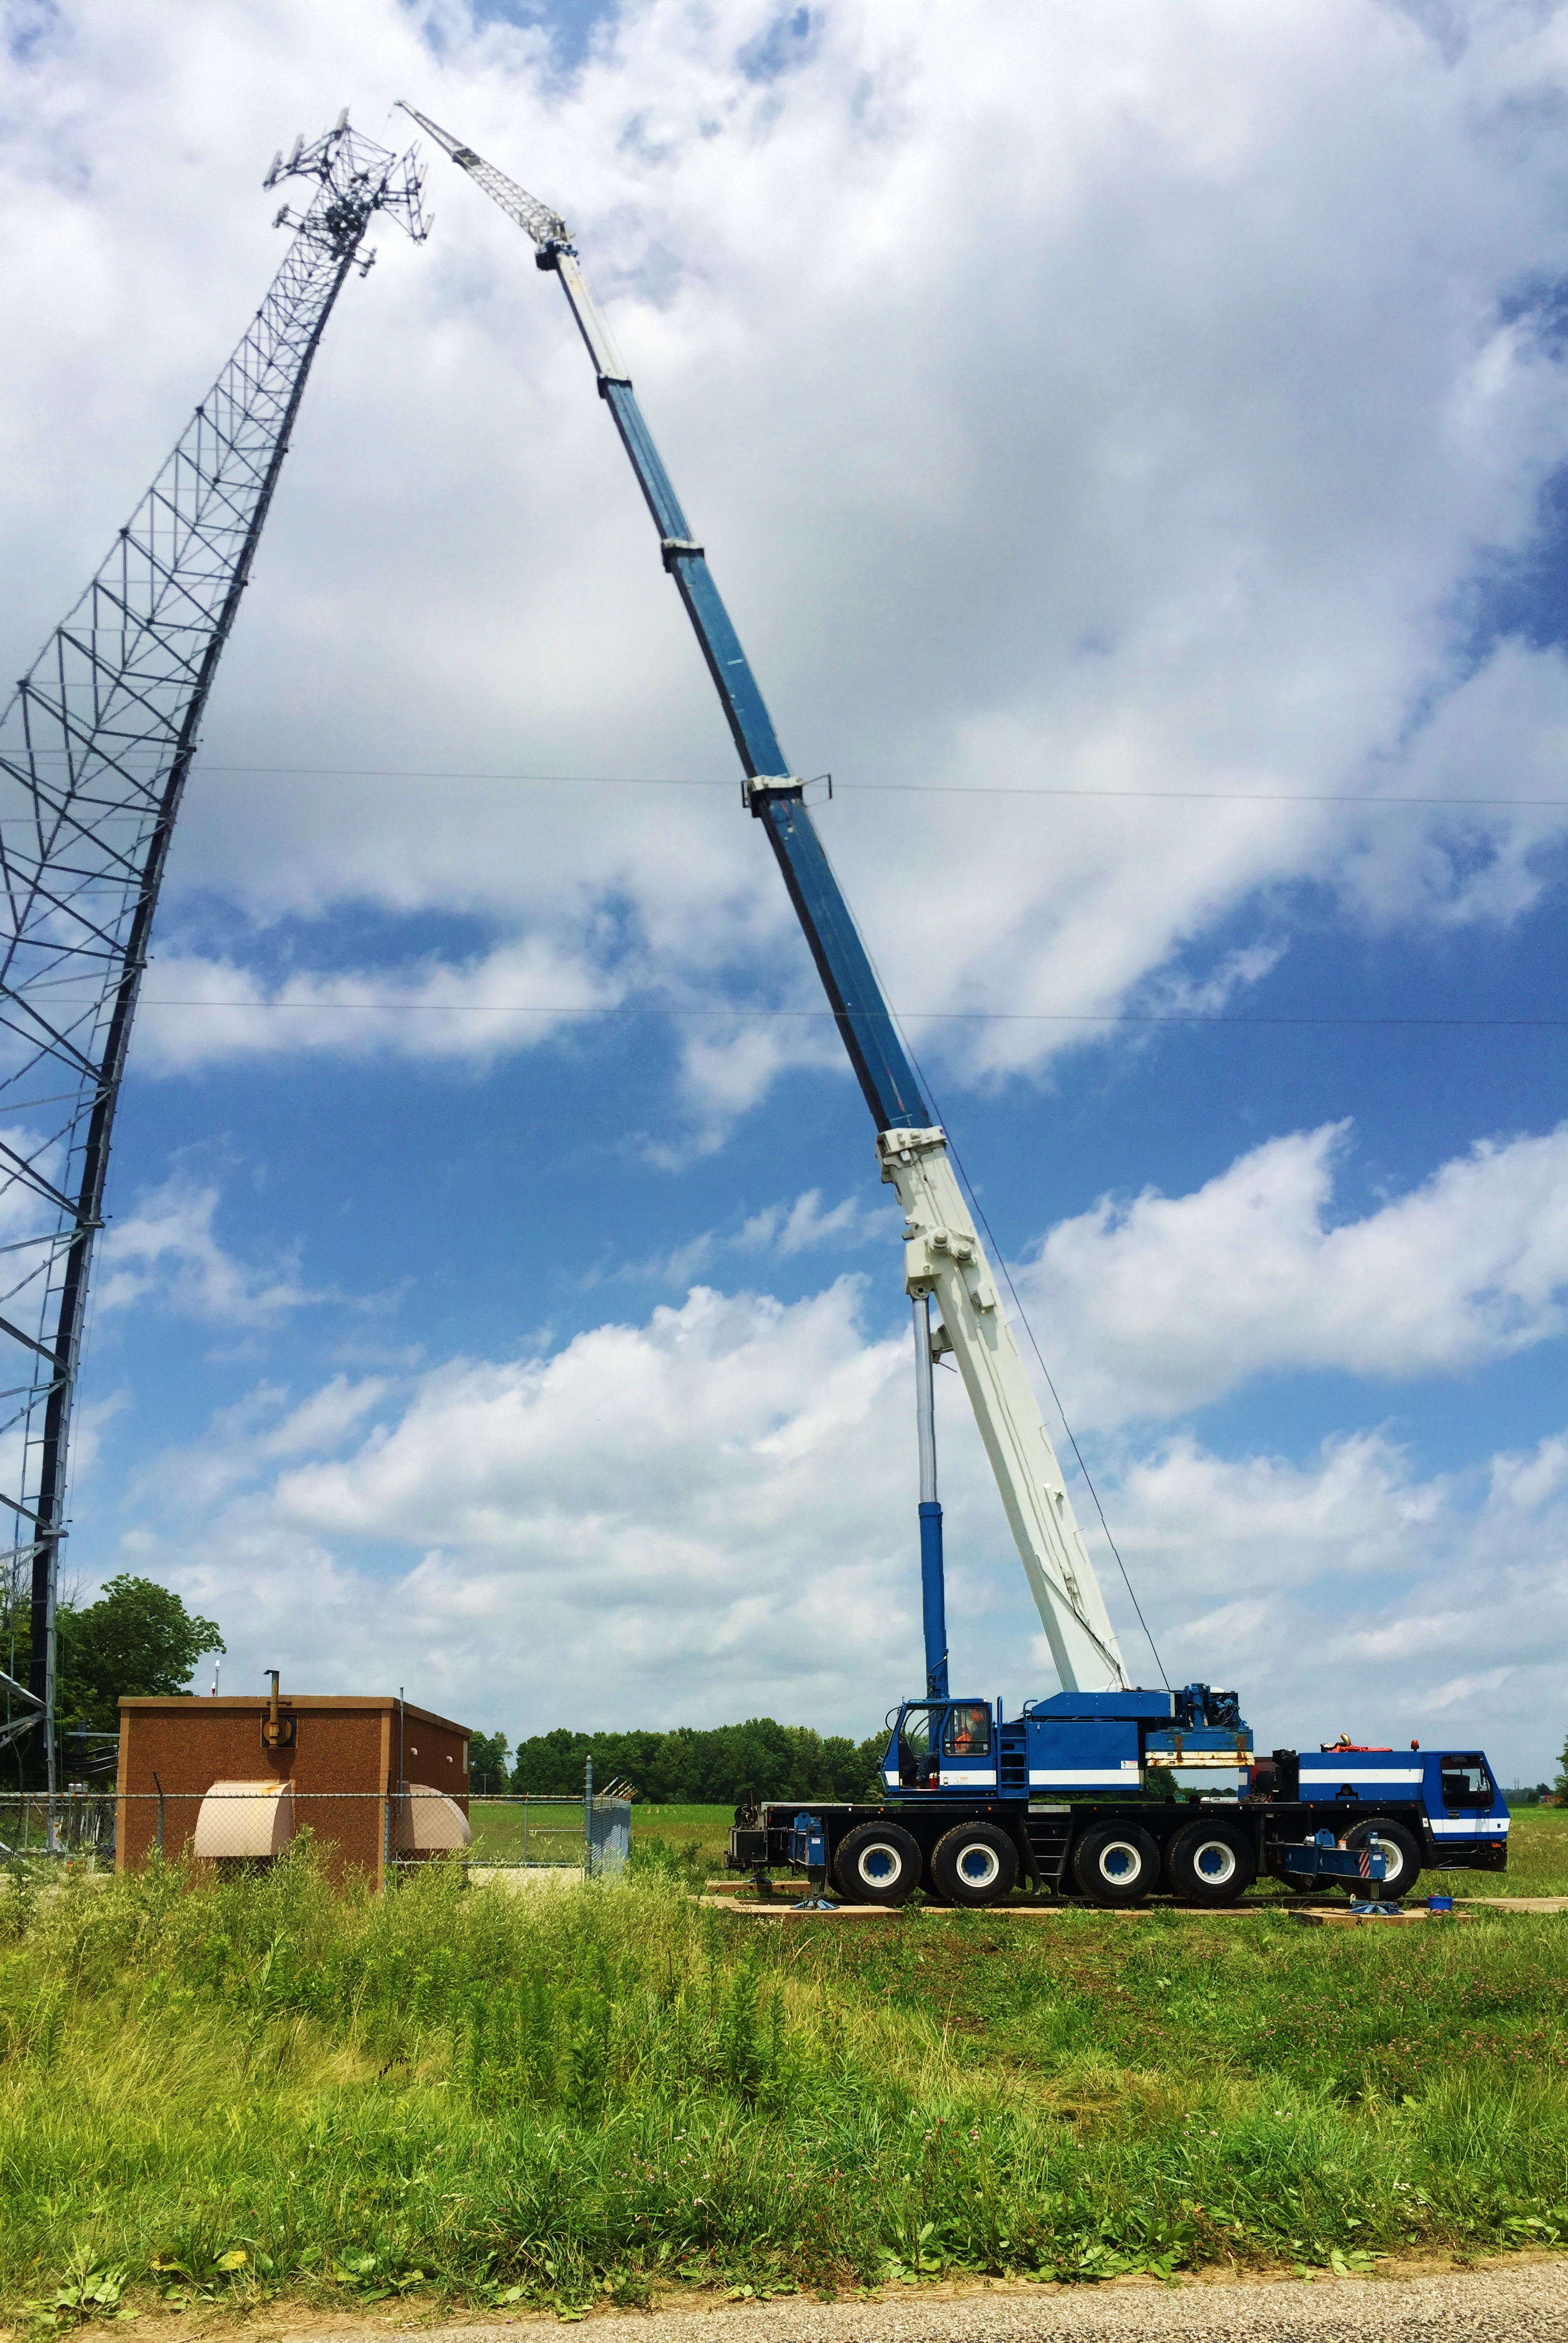 175 ton crane reaches high to hoist new antennas for a cell tower.